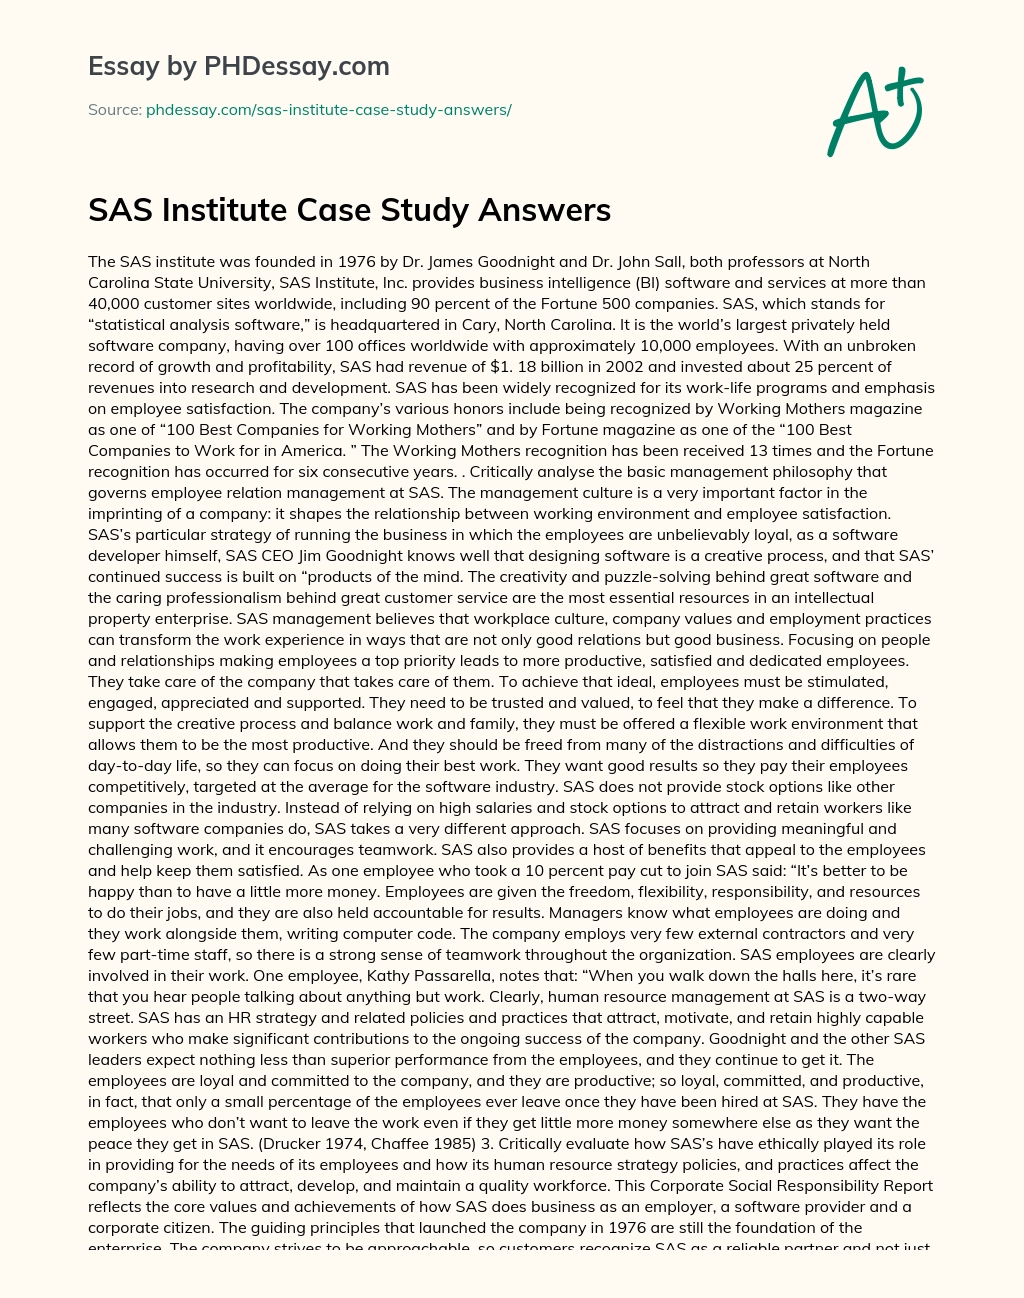 SAS Institute Case Study Answers essay